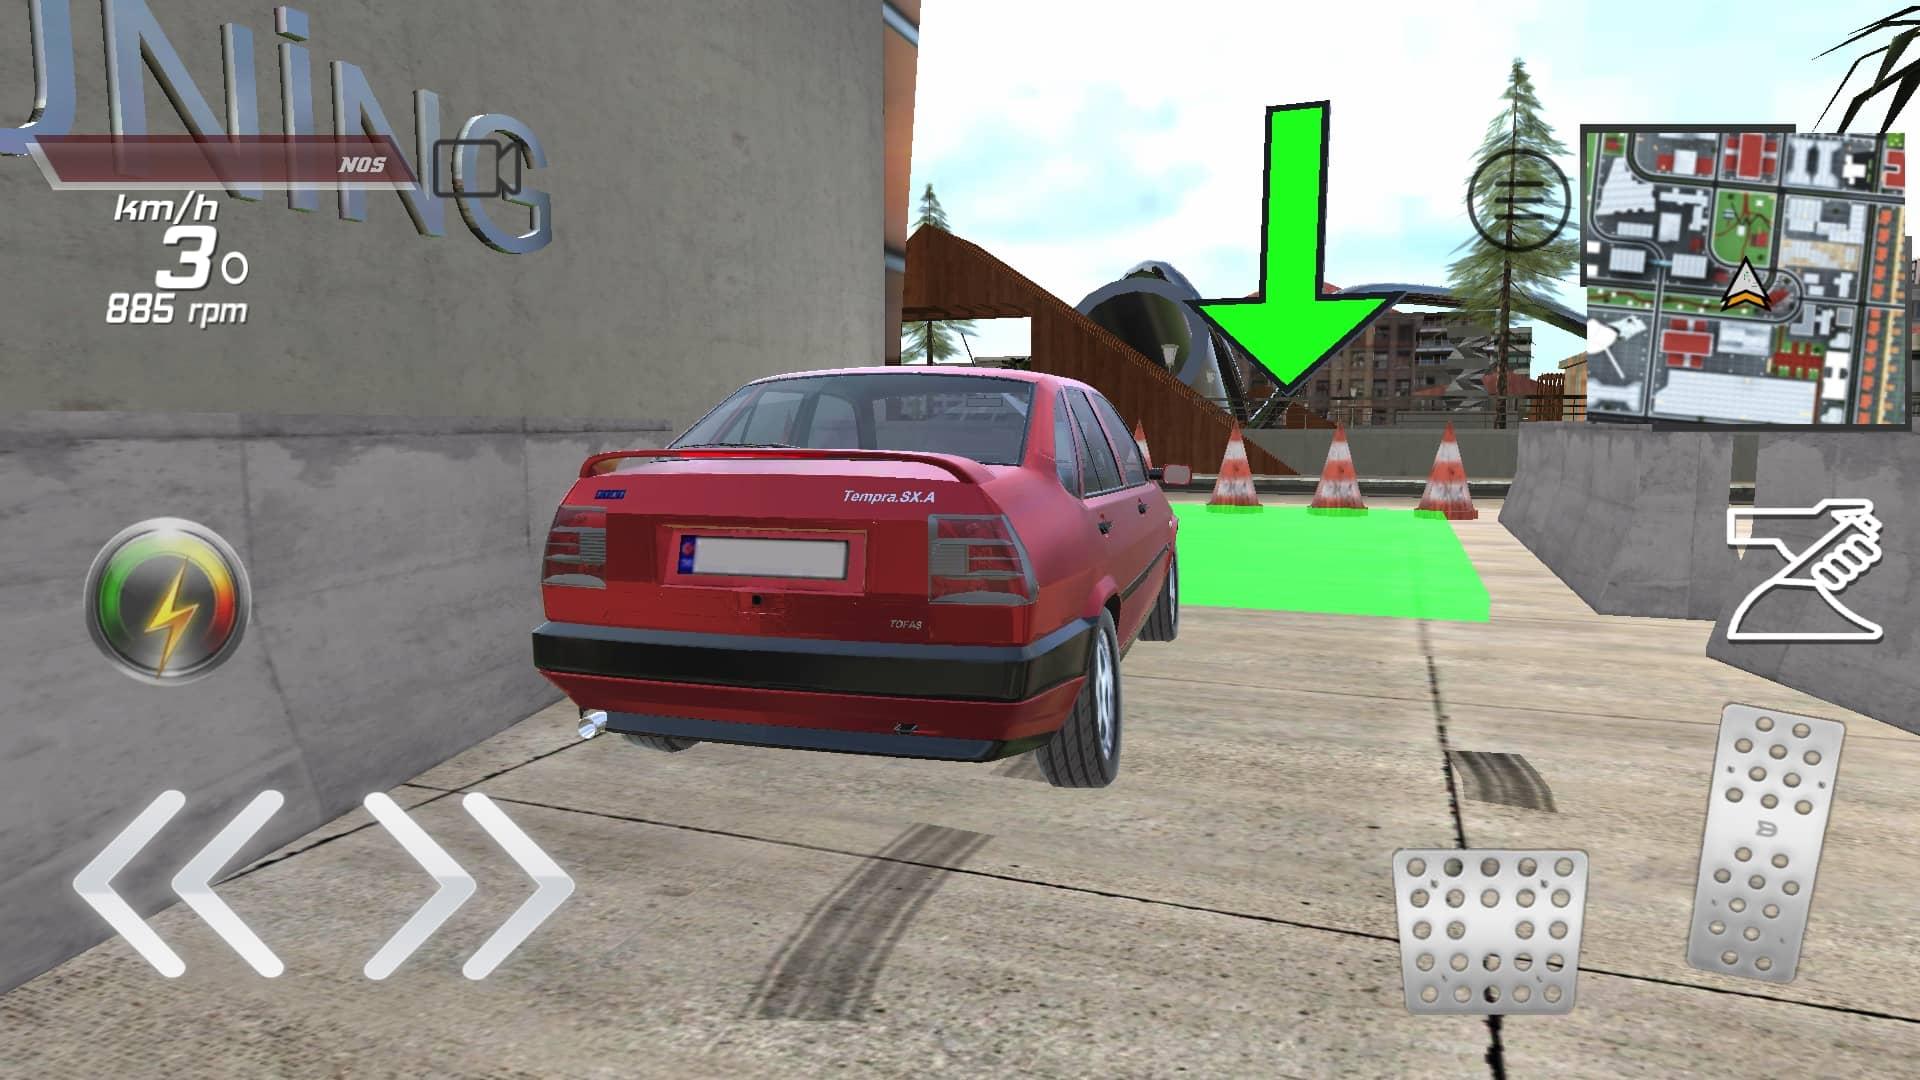 Tempra - City Simulation, Quests and Parking 1.7 Screenshot 13